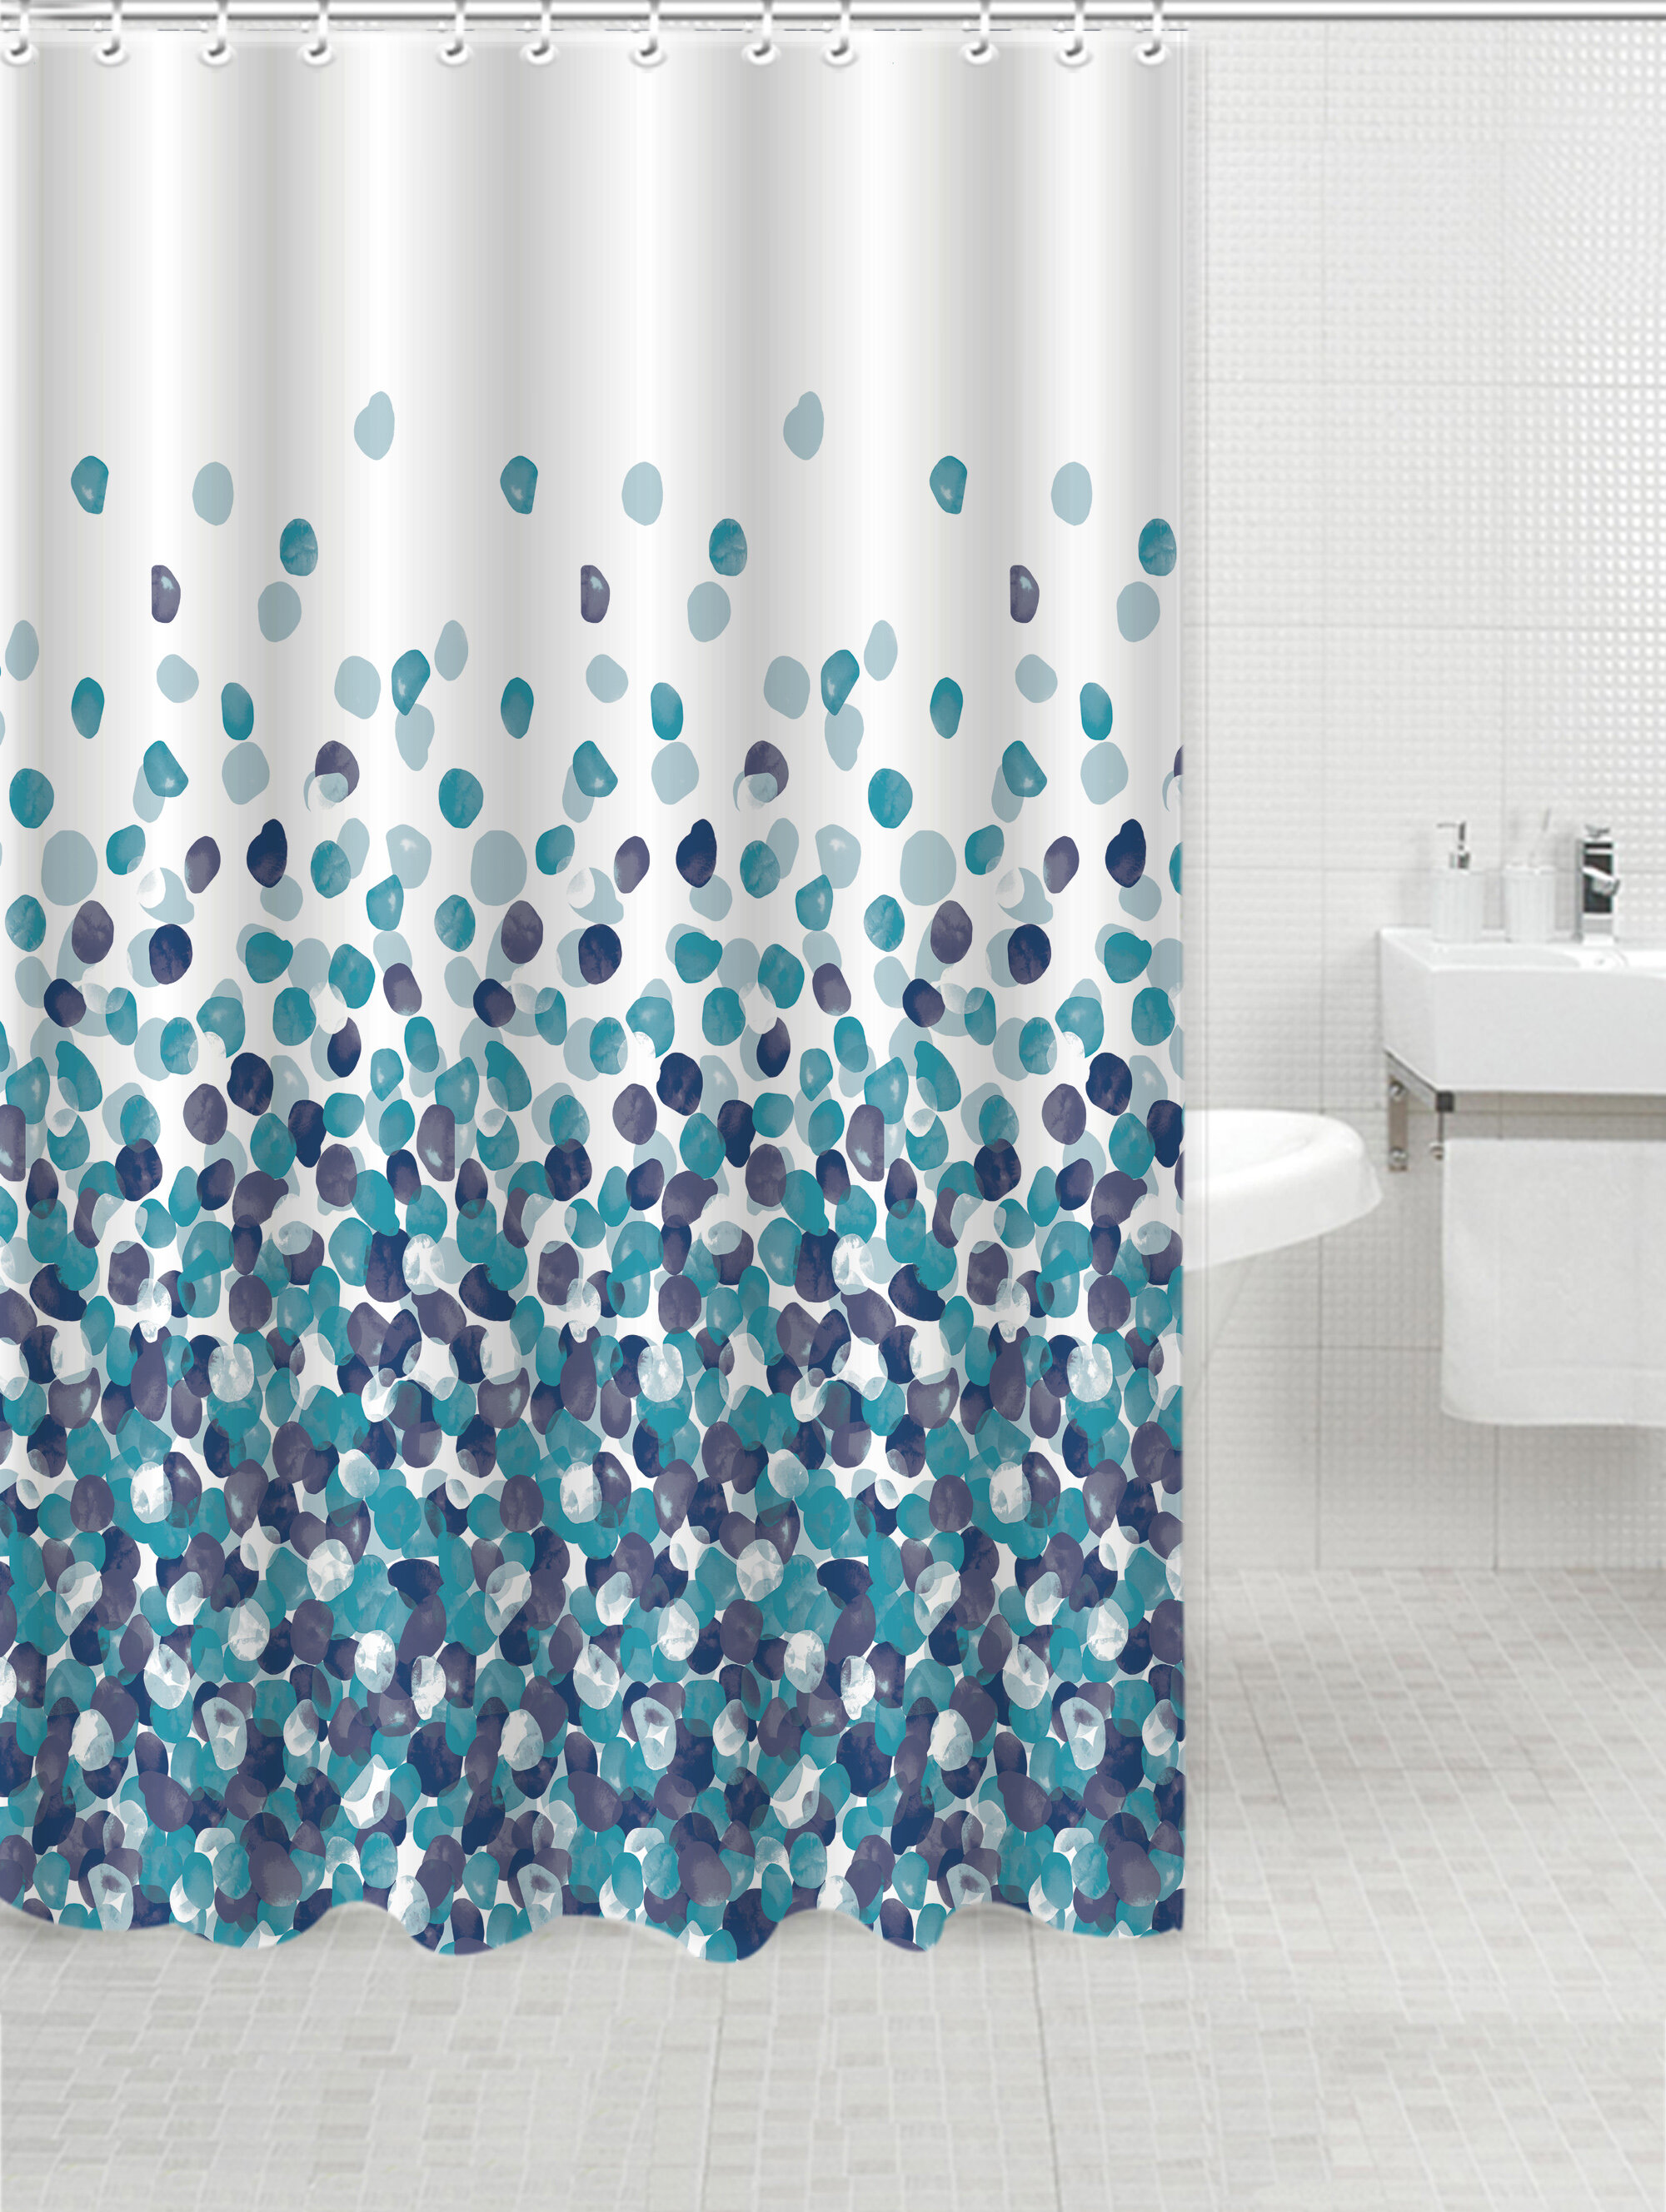 Details about   Bluenoia Shower Curtains 